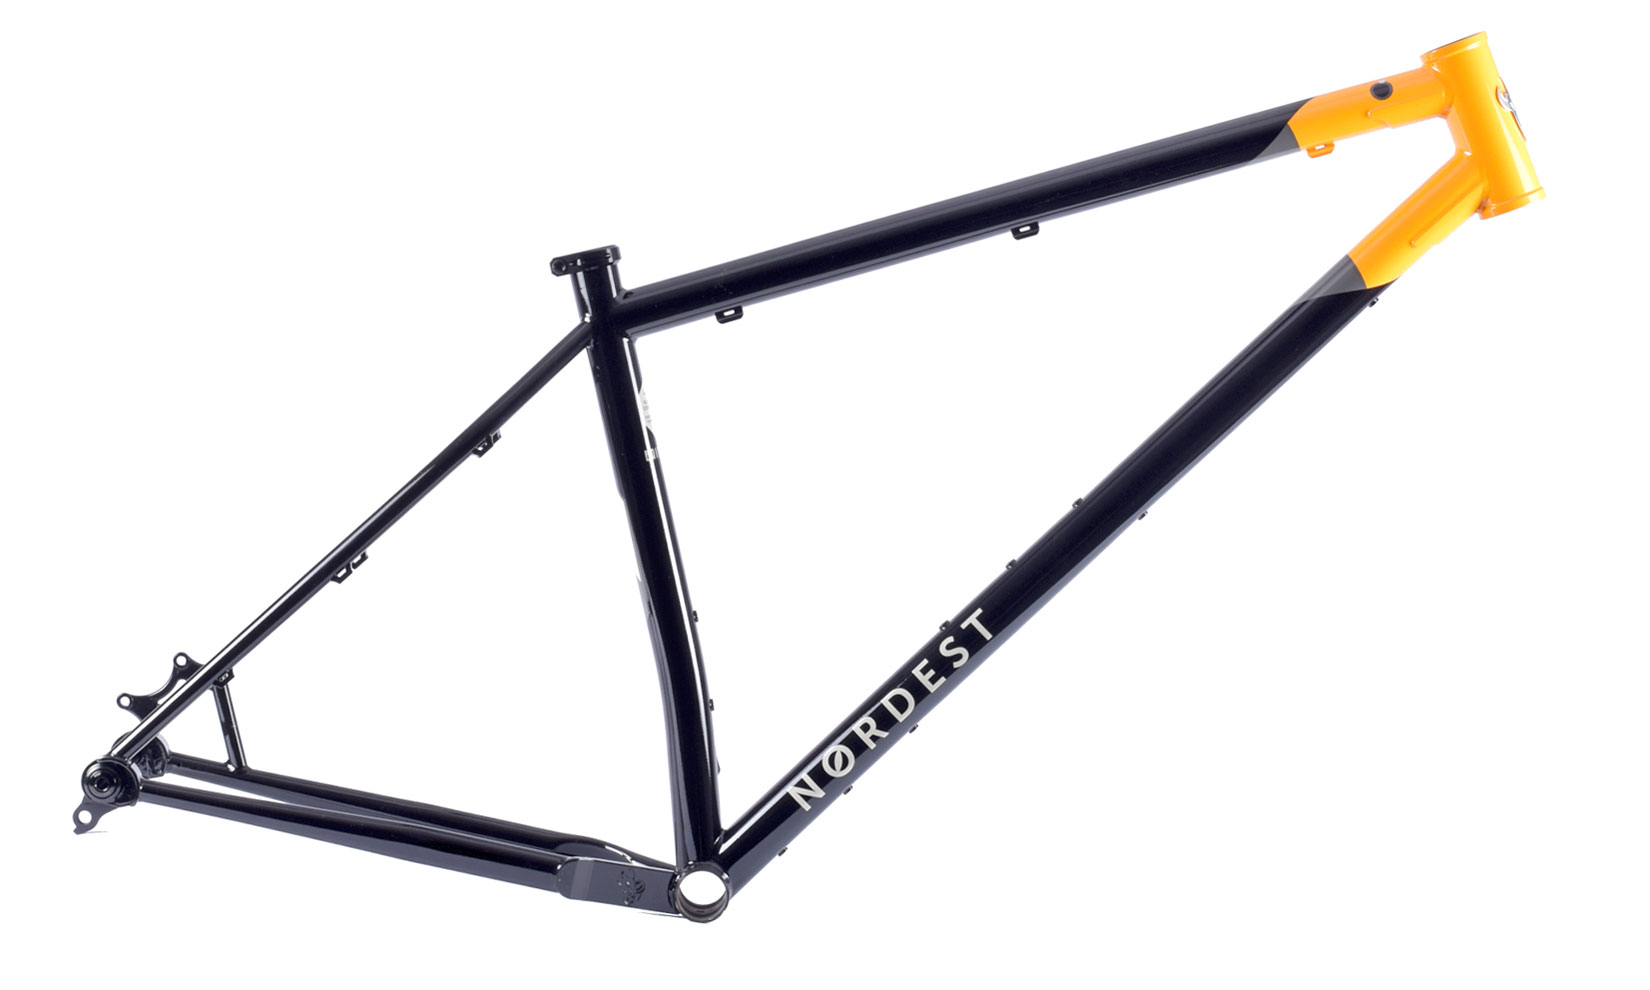 2024 Nordest Britango mk3, affordable 4130 steel mountain bike hardtail frame, in black